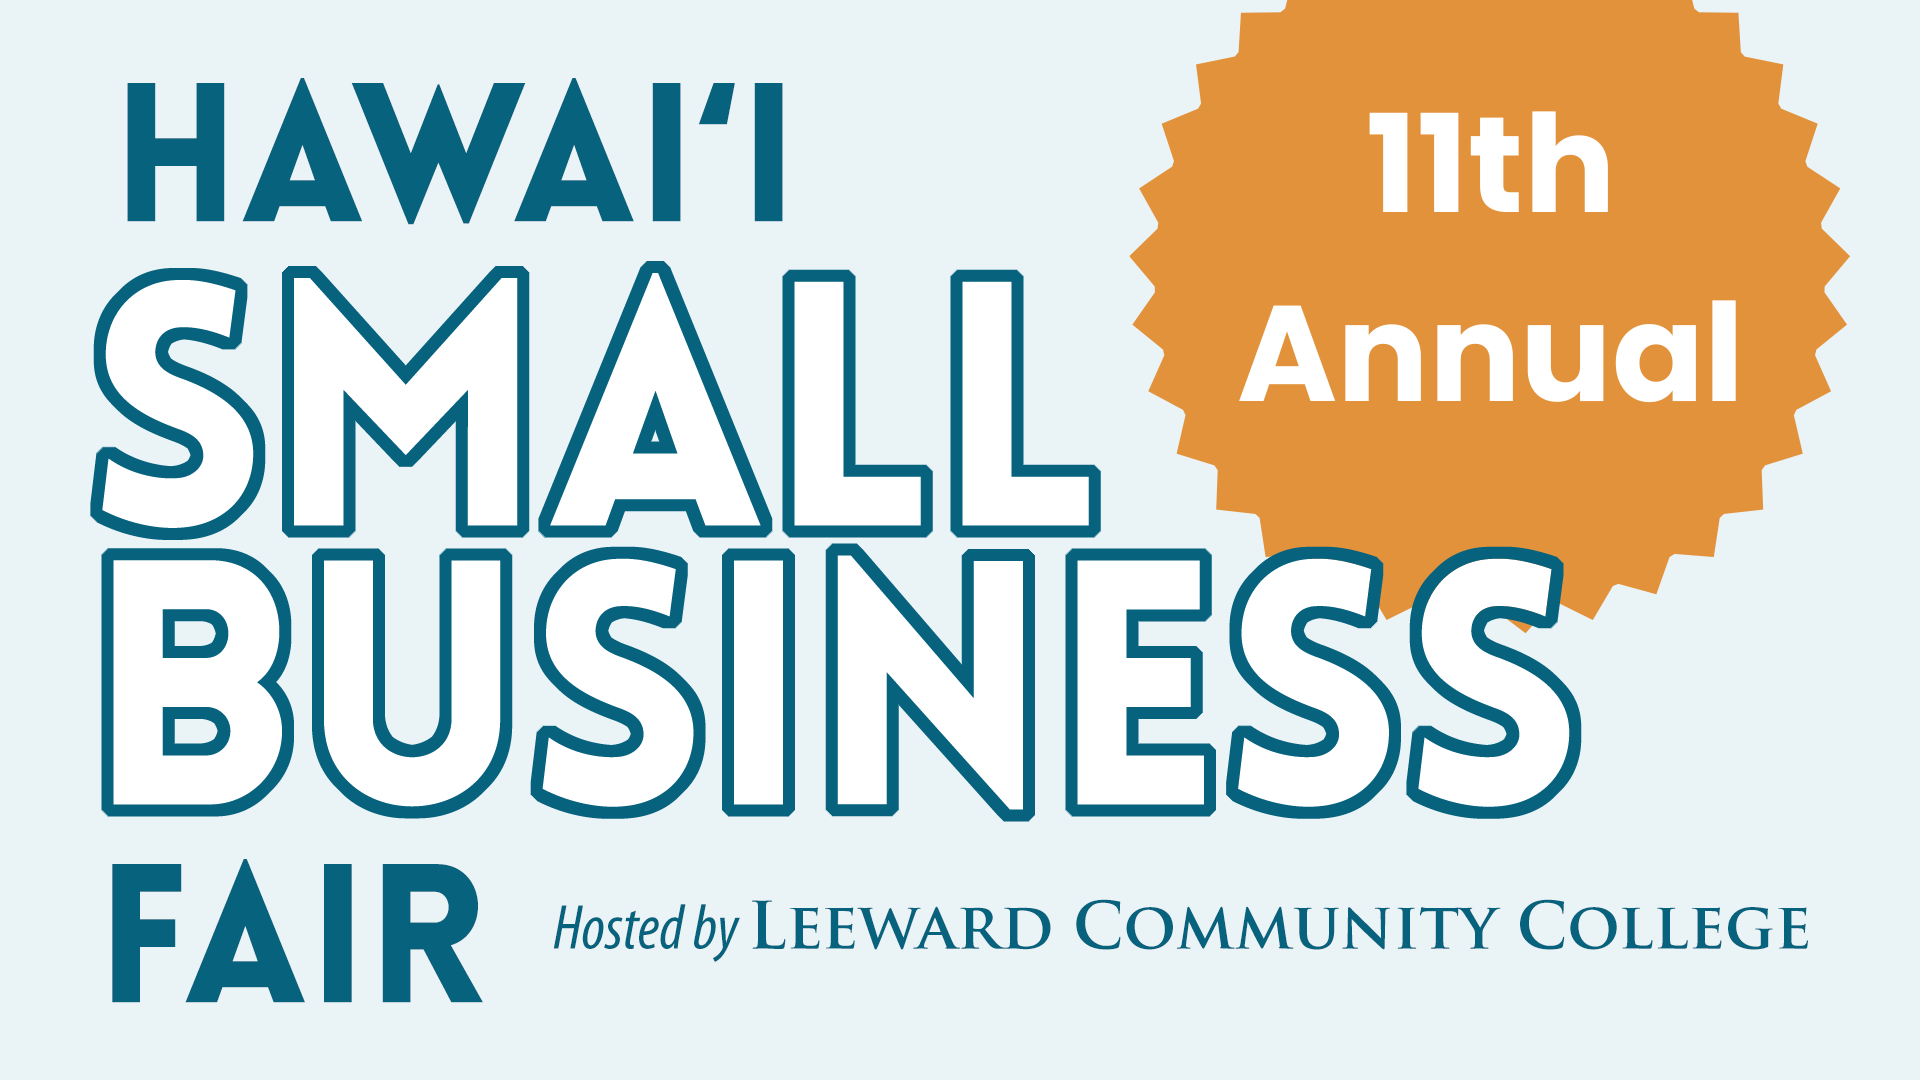 11th annual Hawai‘i Small Business Fair, hosted by Leeward Community College